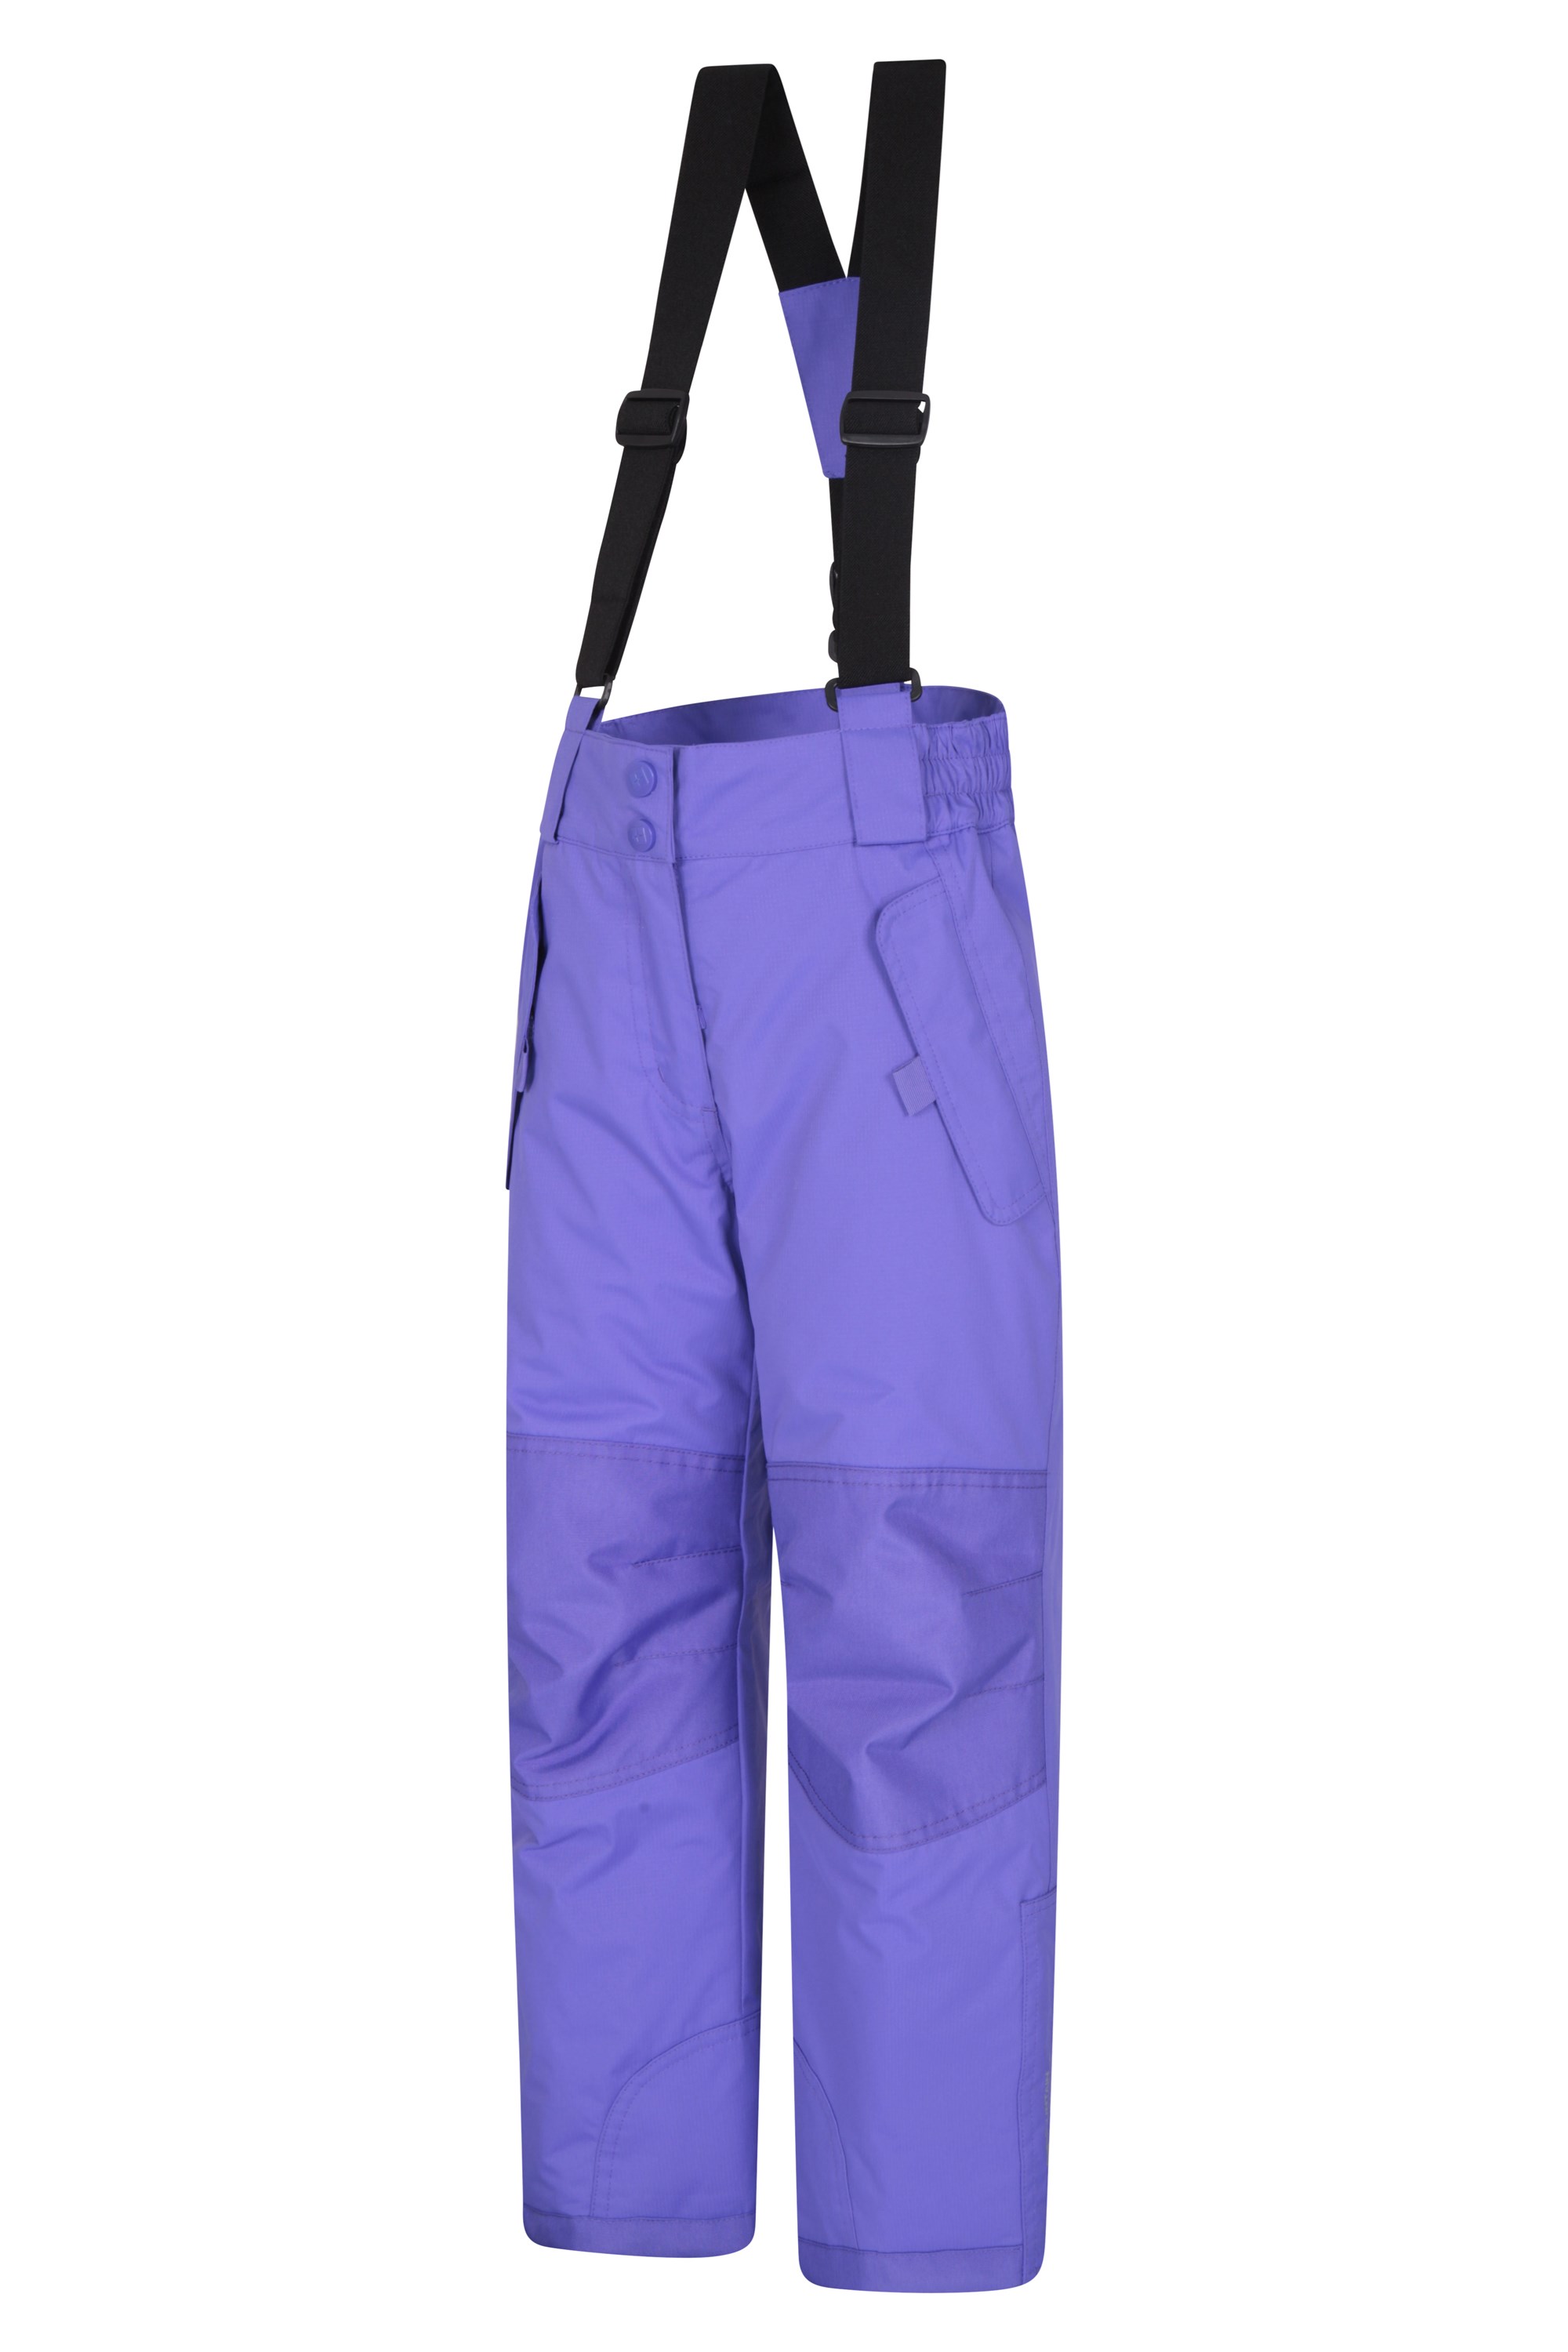 Mountain Warehouse Girls Ski Pants Snowproof Fabric with Part Elasticated Waist 